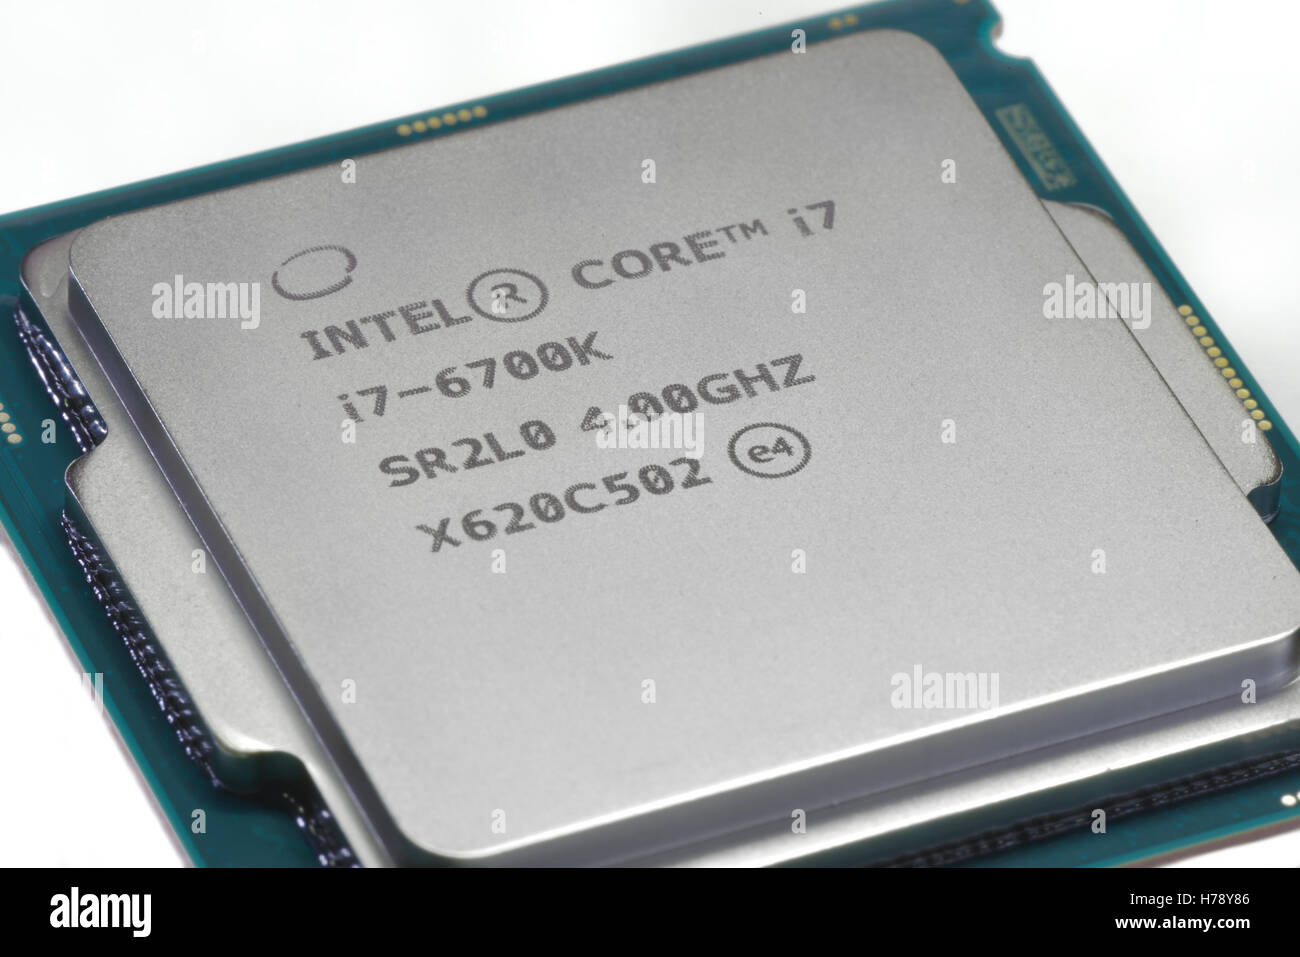 Intel Core i7-6700K 4.00GHzスマホ/家電/カメラ